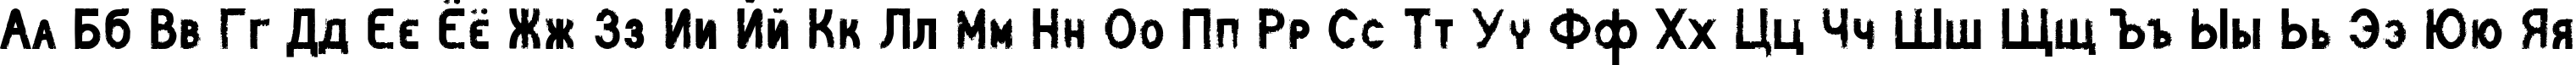 Пример написания русского алфавита шрифтом Catenary Stamp